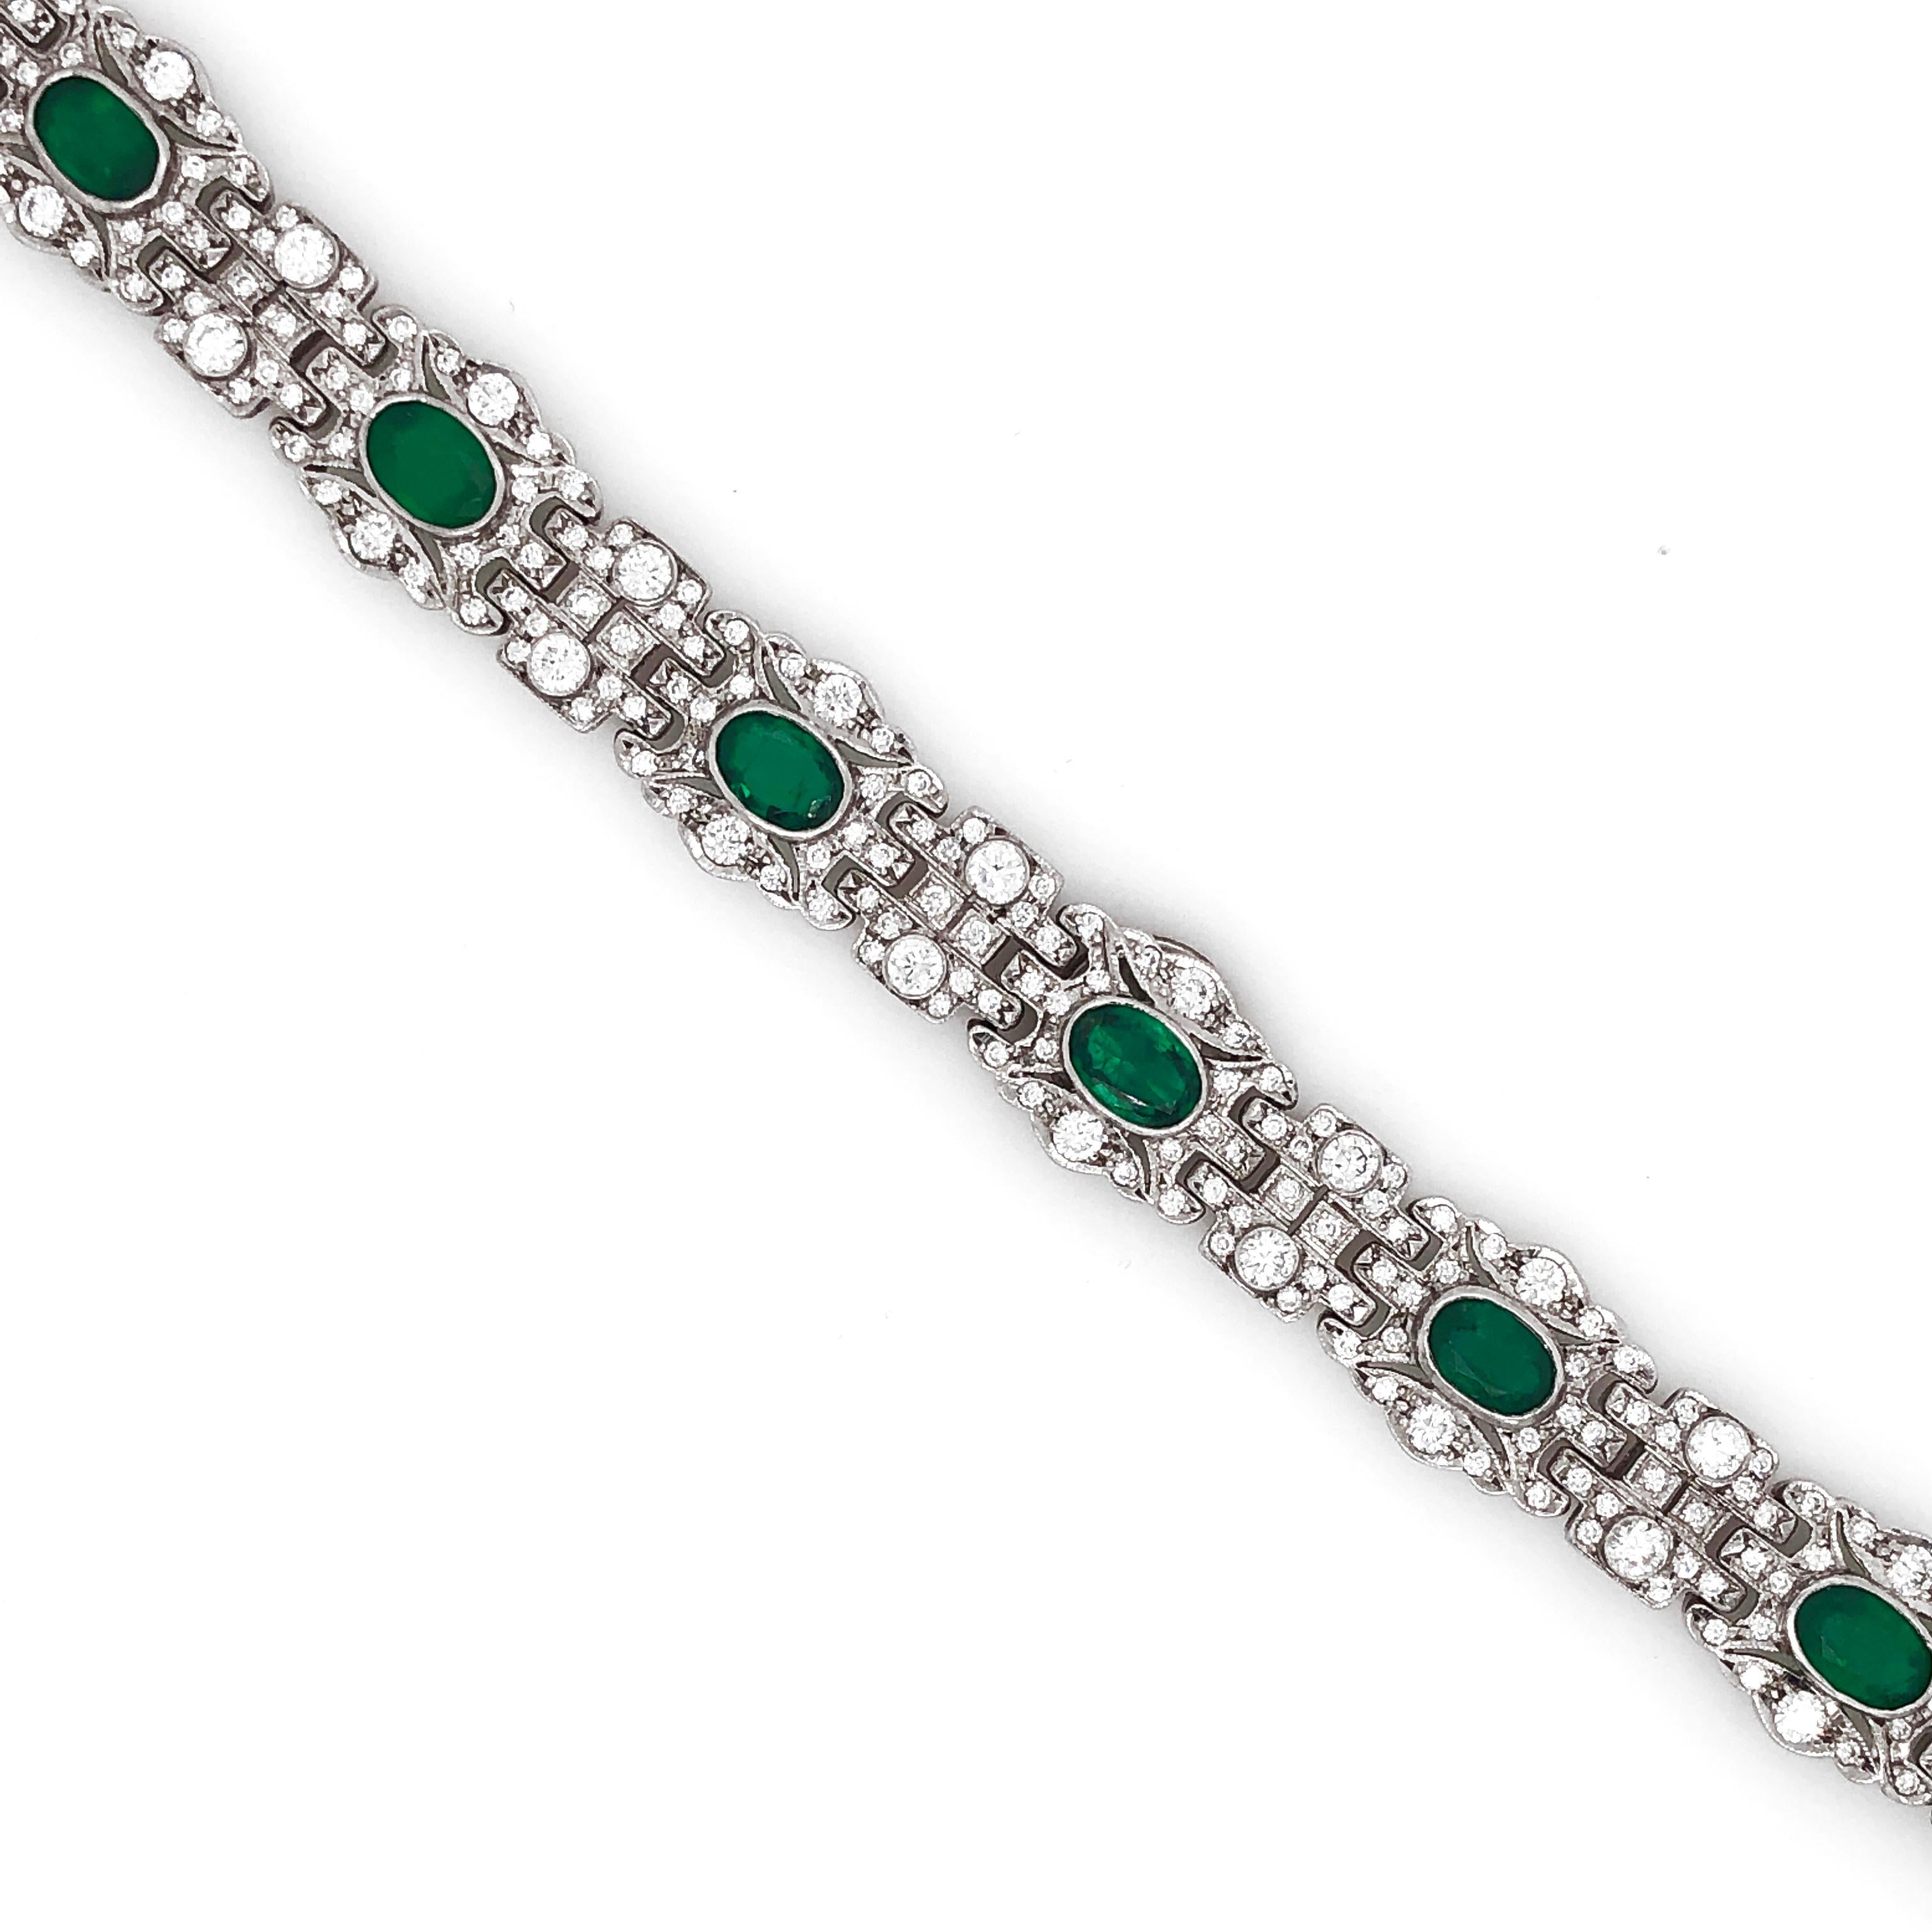 Elegant Art Deco / Retro inspired platinum bracelet.
Round natural diamonds 5.96 ct in G-H color clarity VS.
Oval Zambian emeralds 5.68 ct. 
Length: 18 cm
Width: 1.3 cm
Weight: 44 g